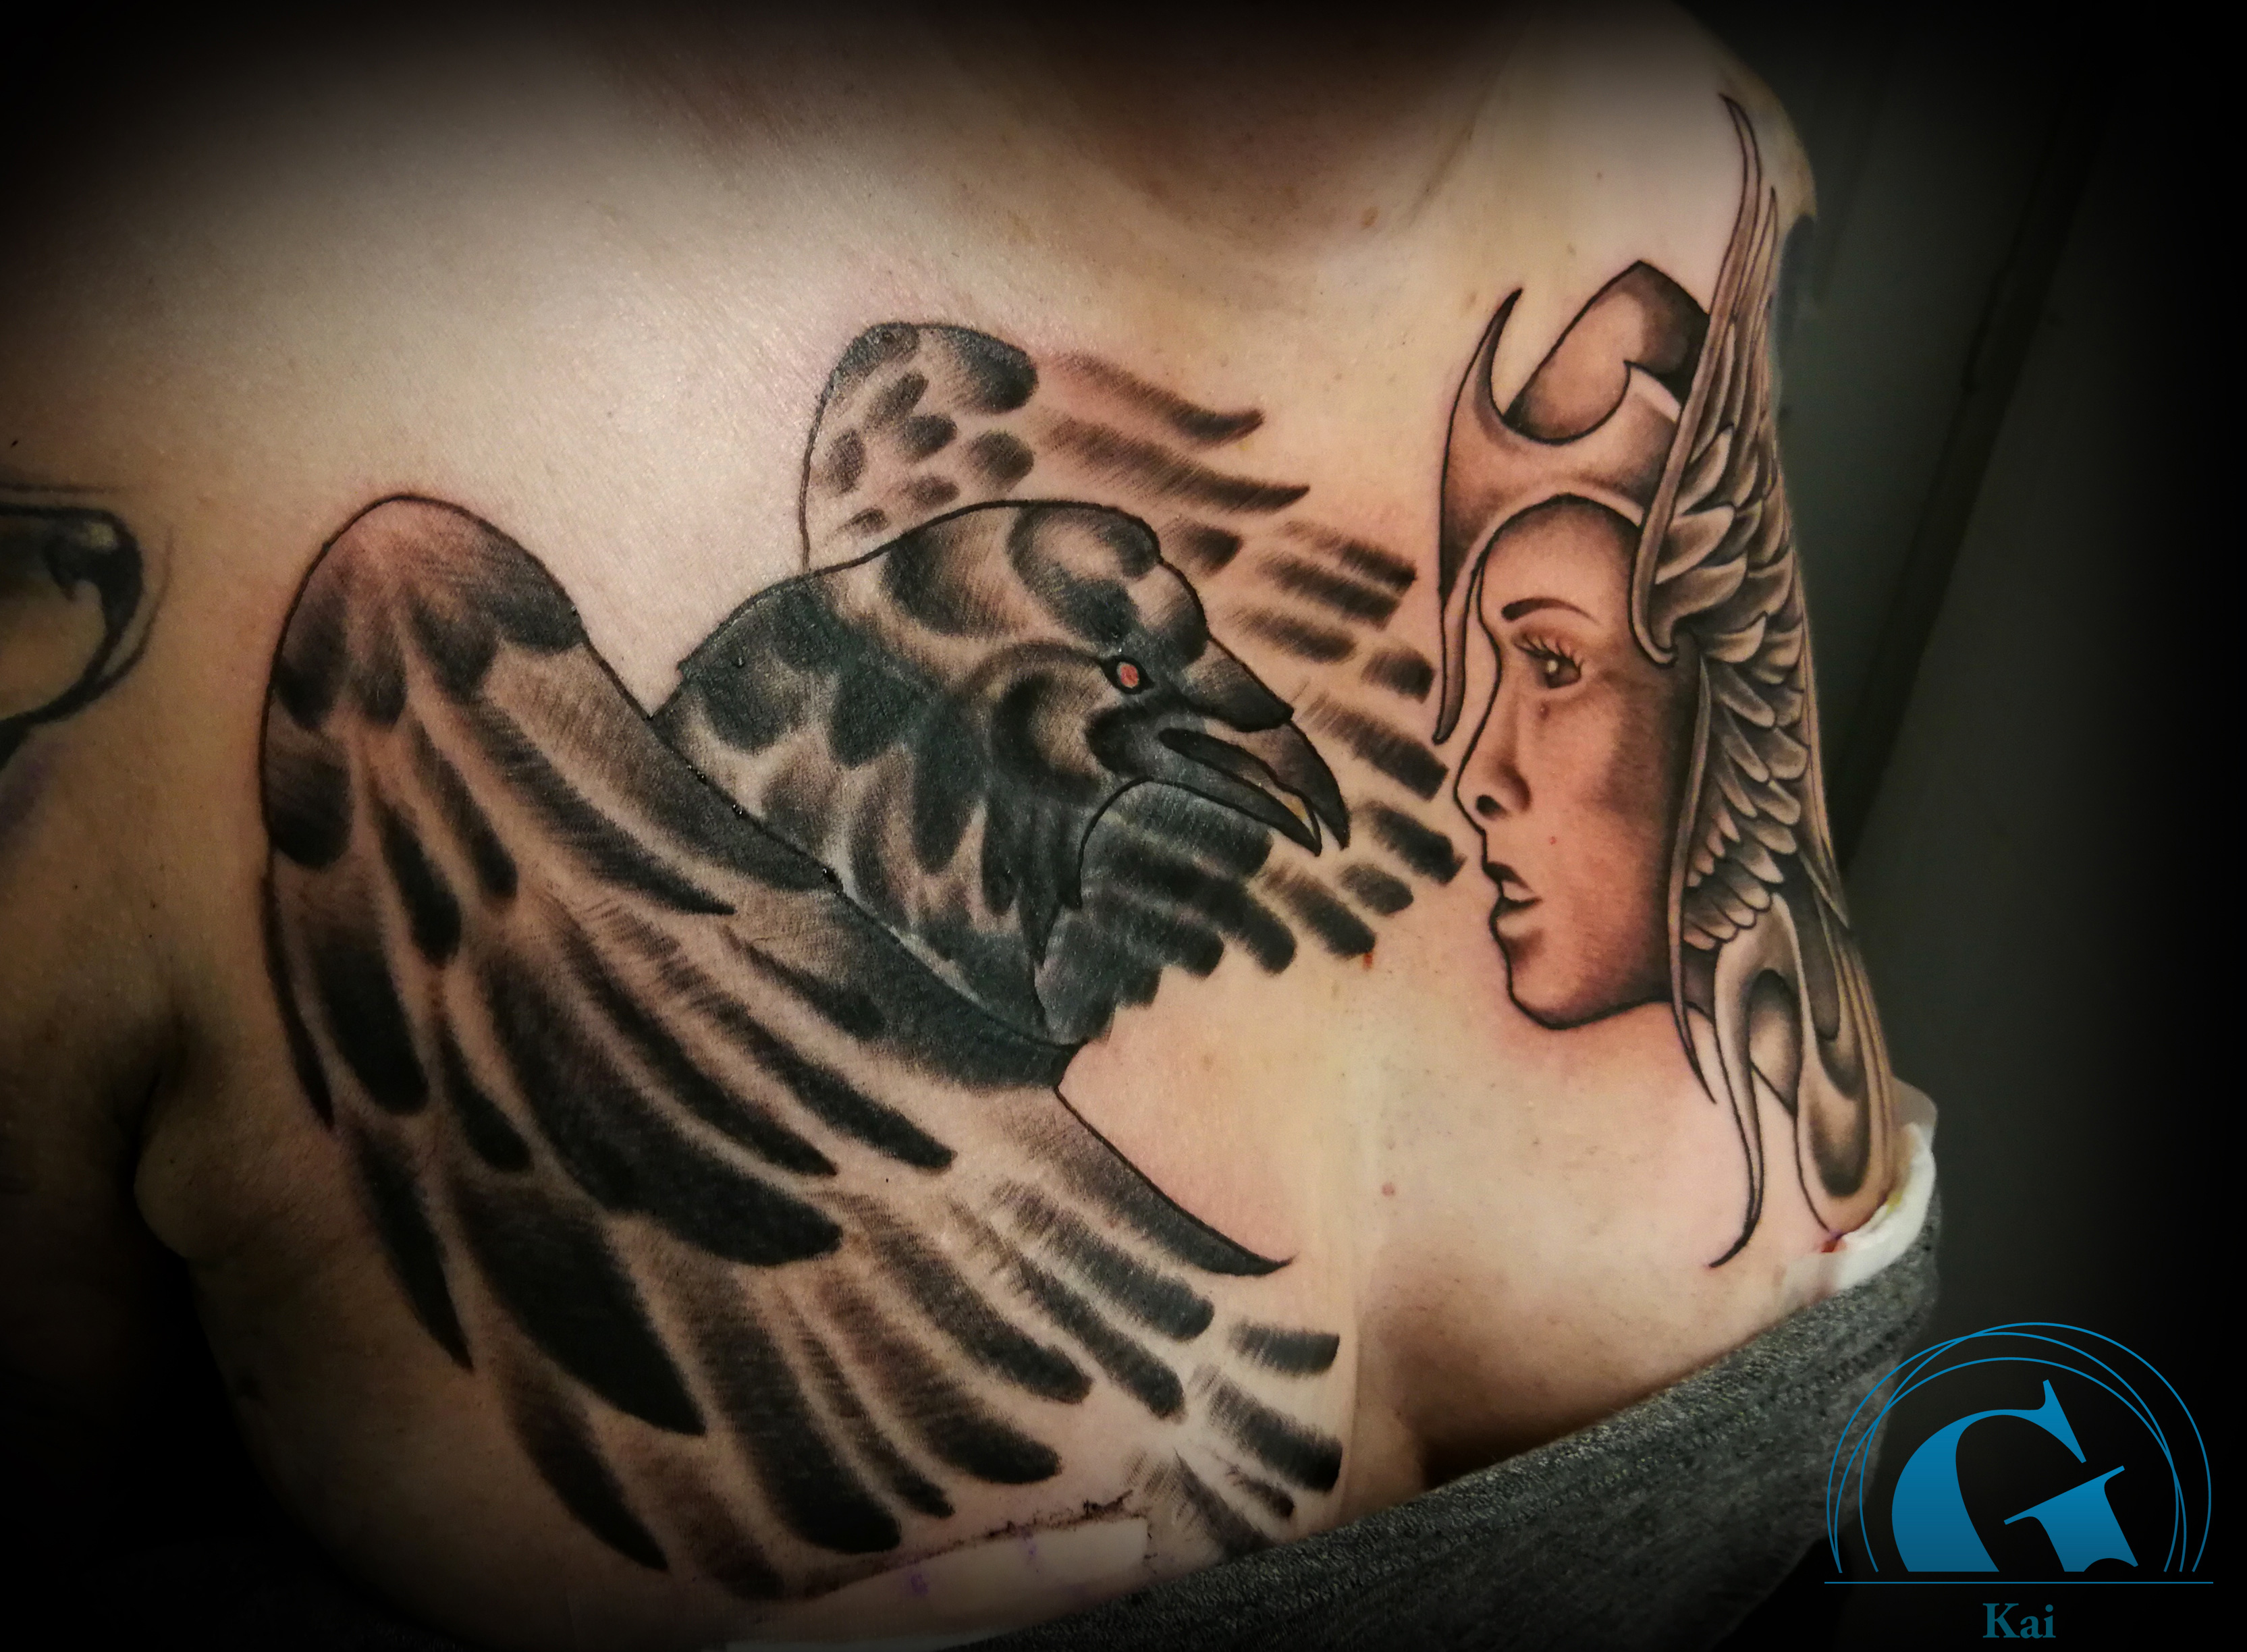 graphicaderme-kai-tatouage-avignon-vaucluse-corbeau-oiseau-valkyrie-recouvrement-cover-tattoo